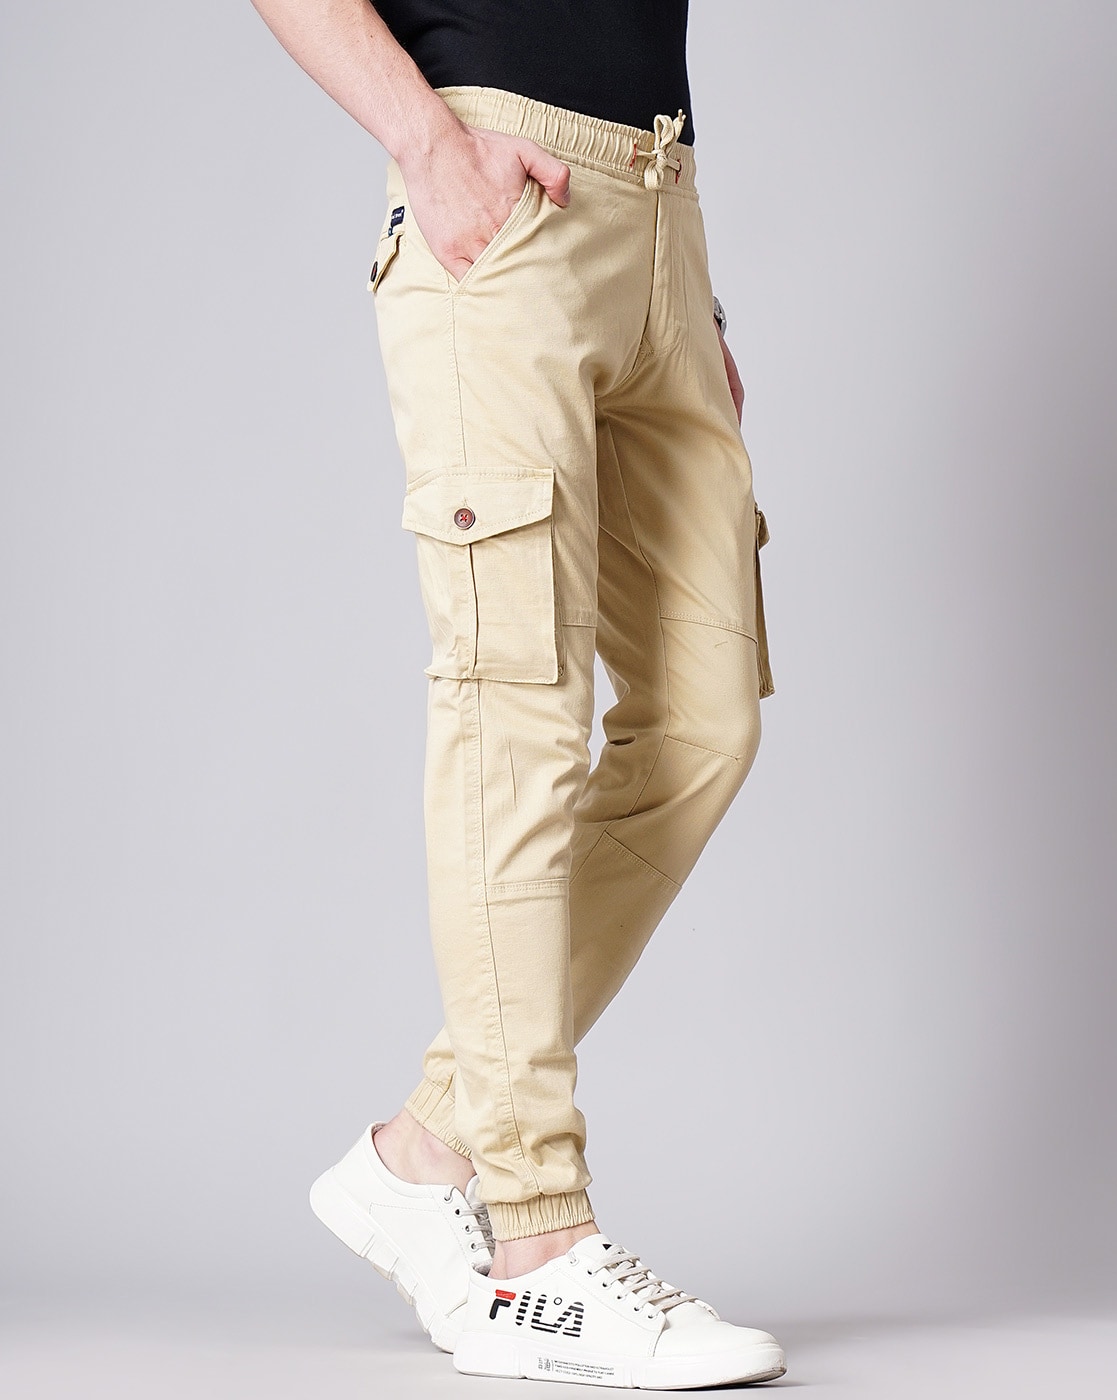 Cargo Pants Outfits | Cargo pants outfit men, Cargo pants style, Vans  outfit men